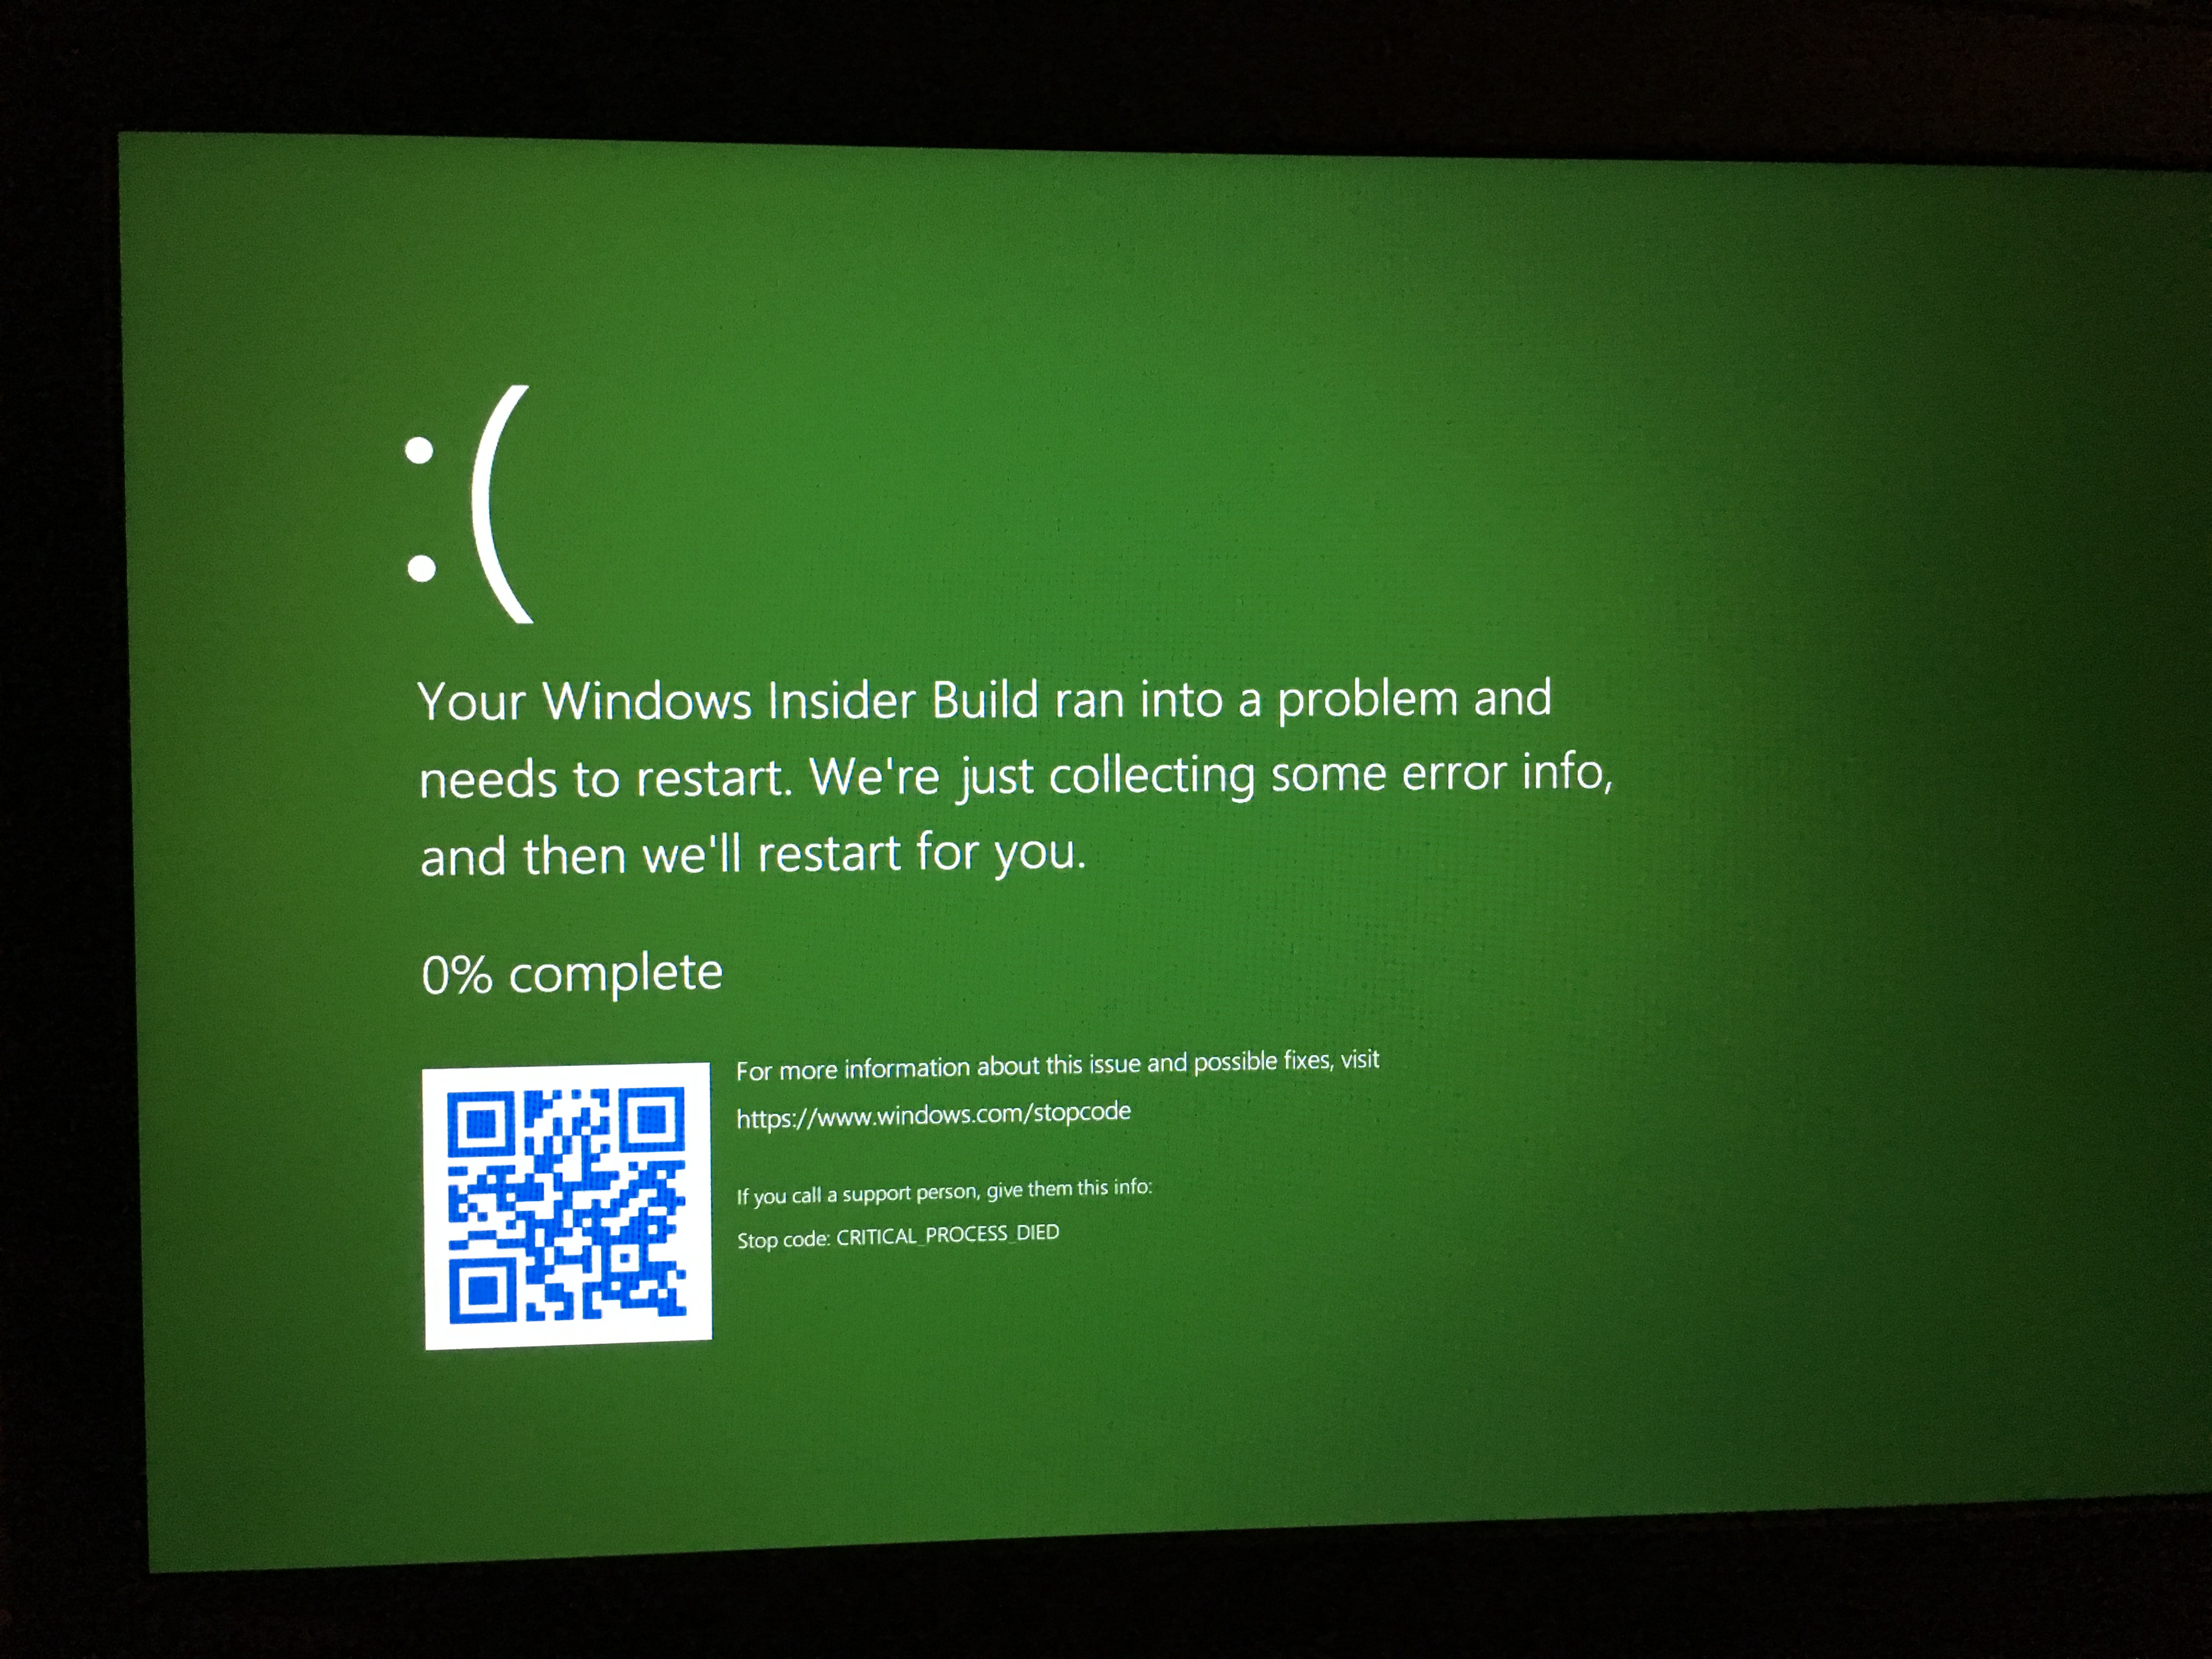 Windows Insider Build ran into a problem! - Microsoft Community